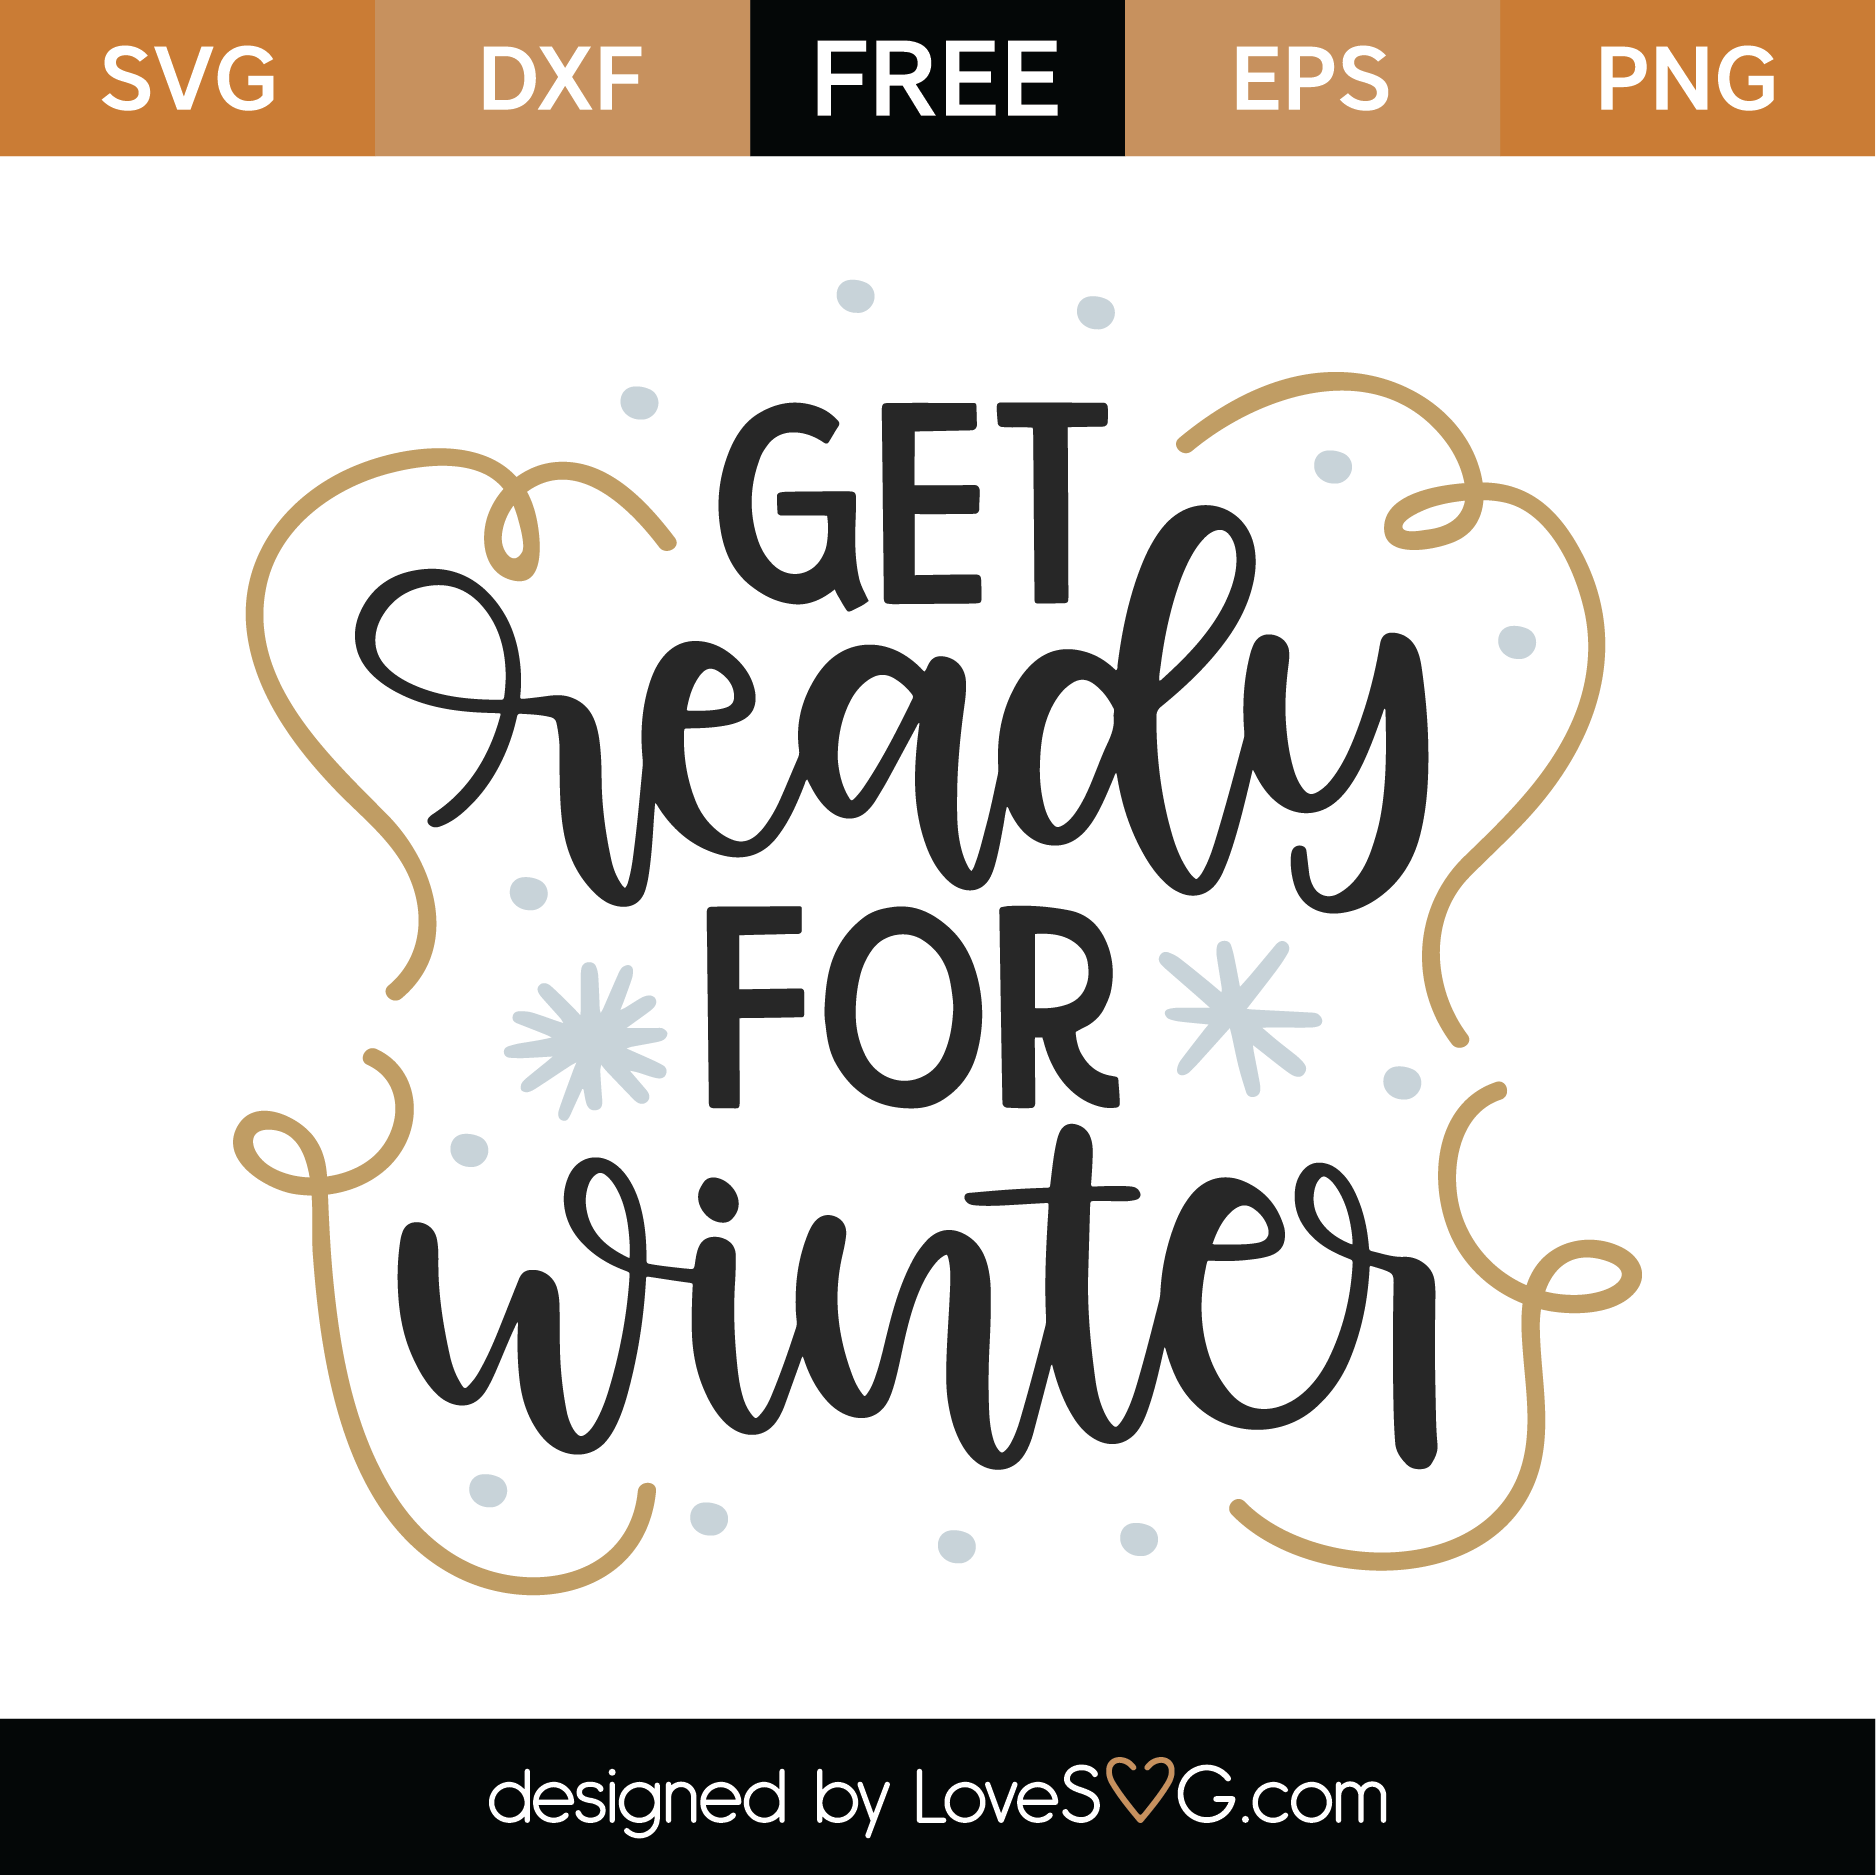 Download Free Get Ready For Winter SVG Cut File | Lovesvg.com